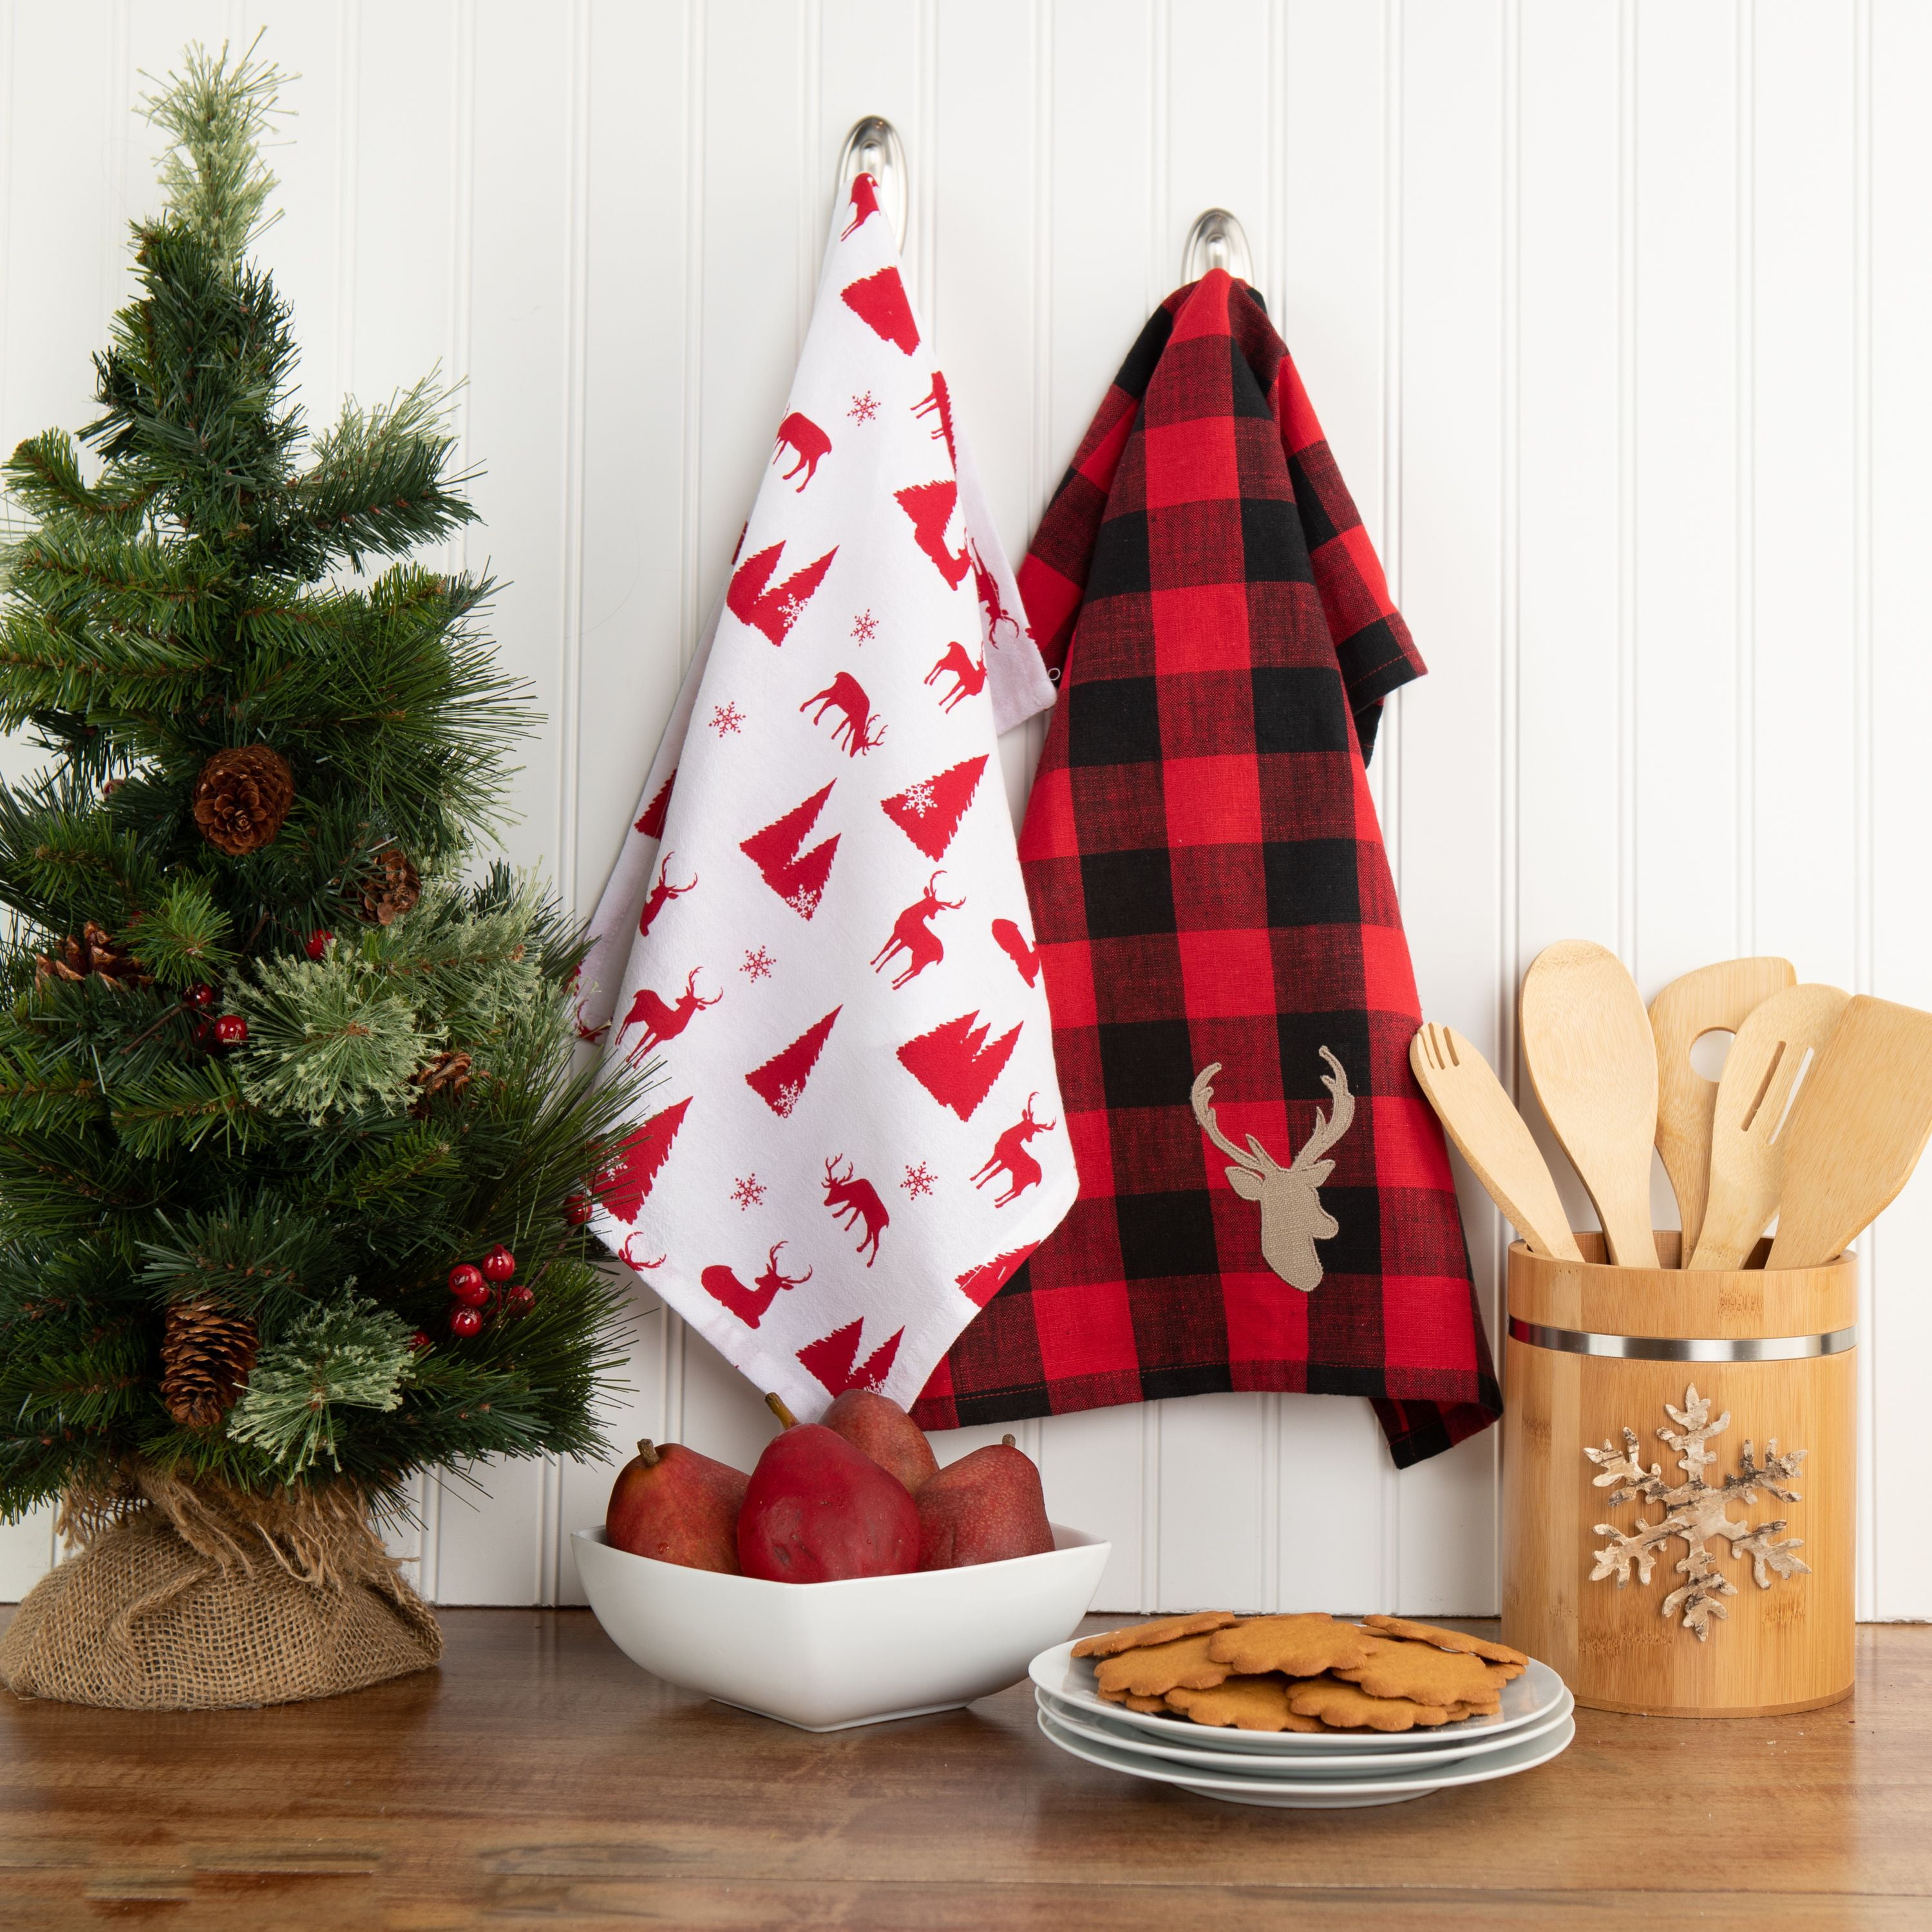 Happy Holidays l Snowflakes Red Buffalo Plaid Kitchen Towel, Zazzle